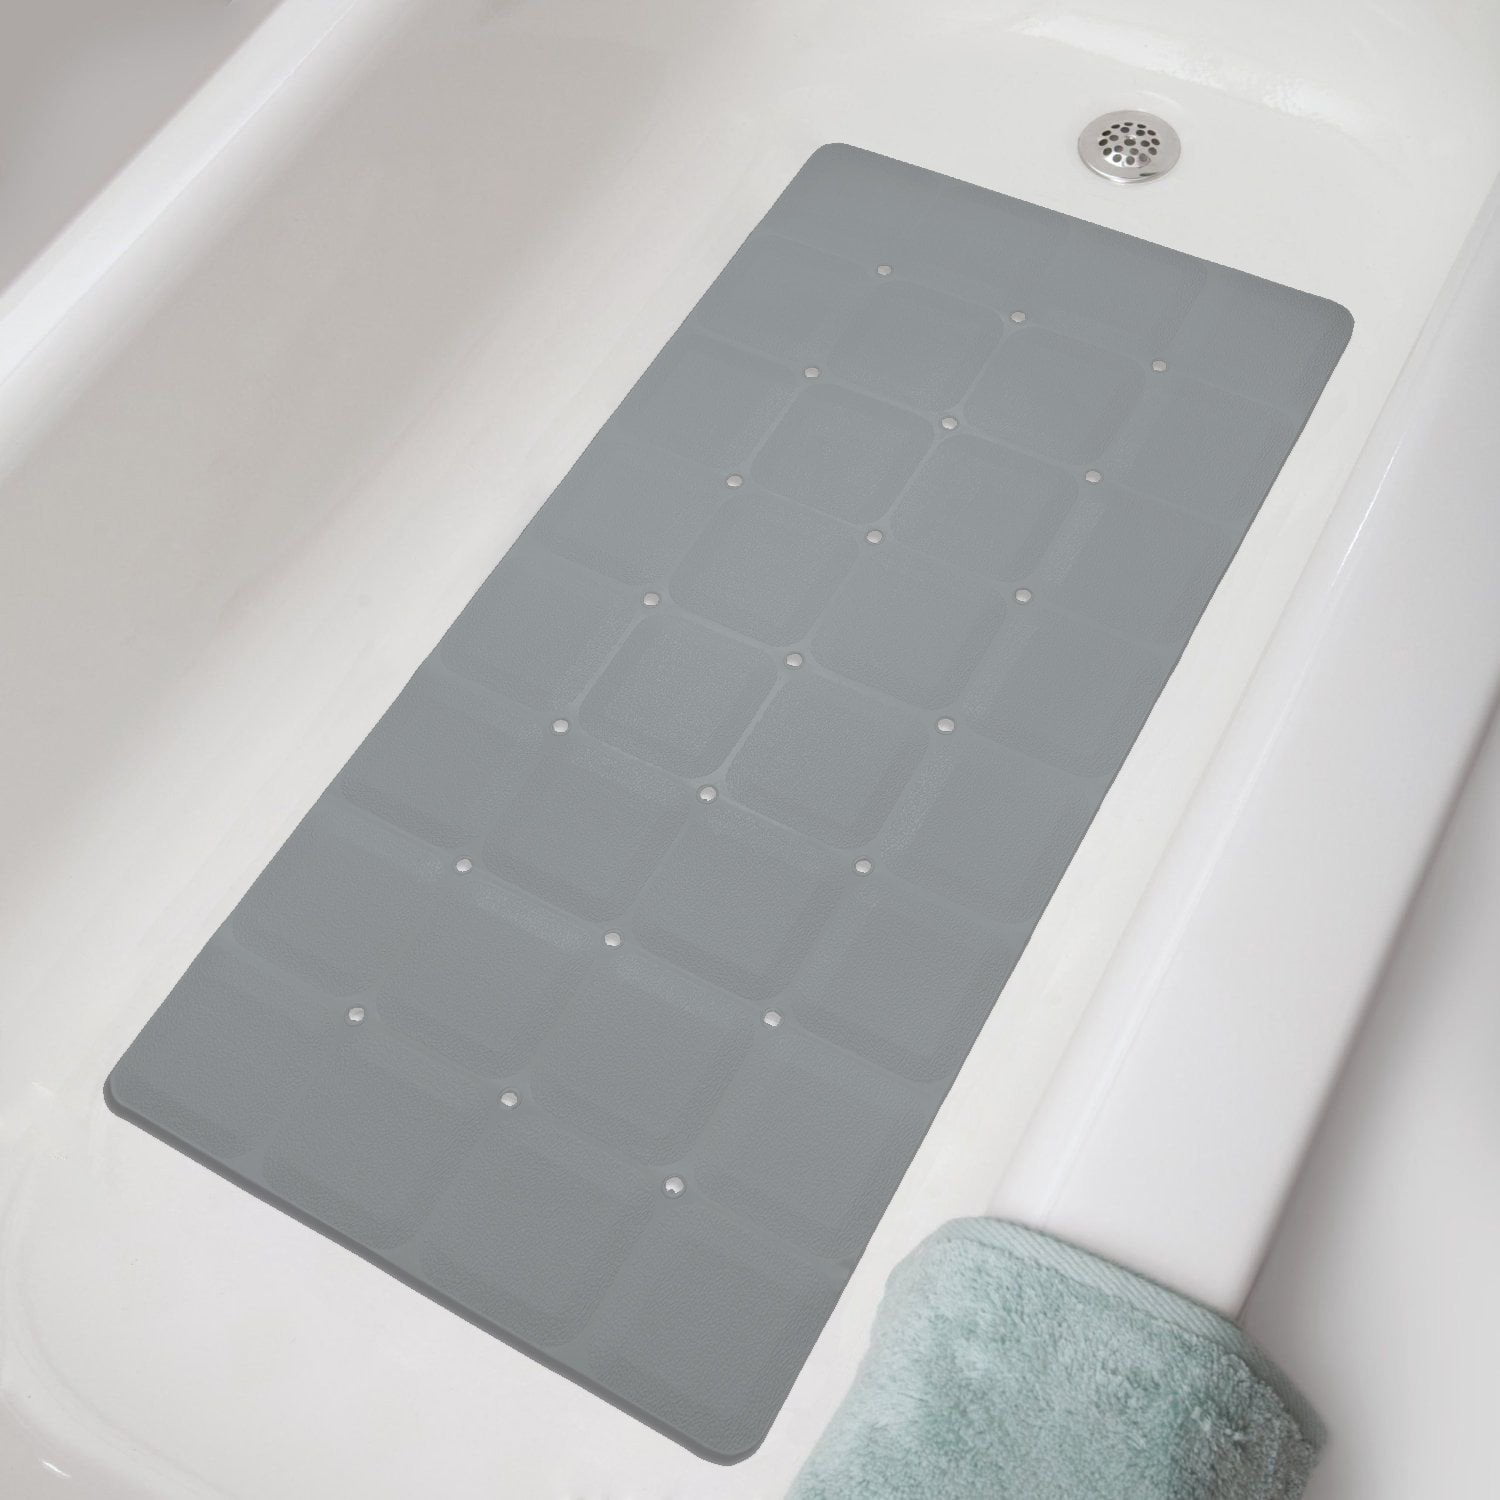 Sultans Linens Foldable Non Slip Rubber Bath Mat For Textured Tub and Reglazed Tub 28x14 WHITE 